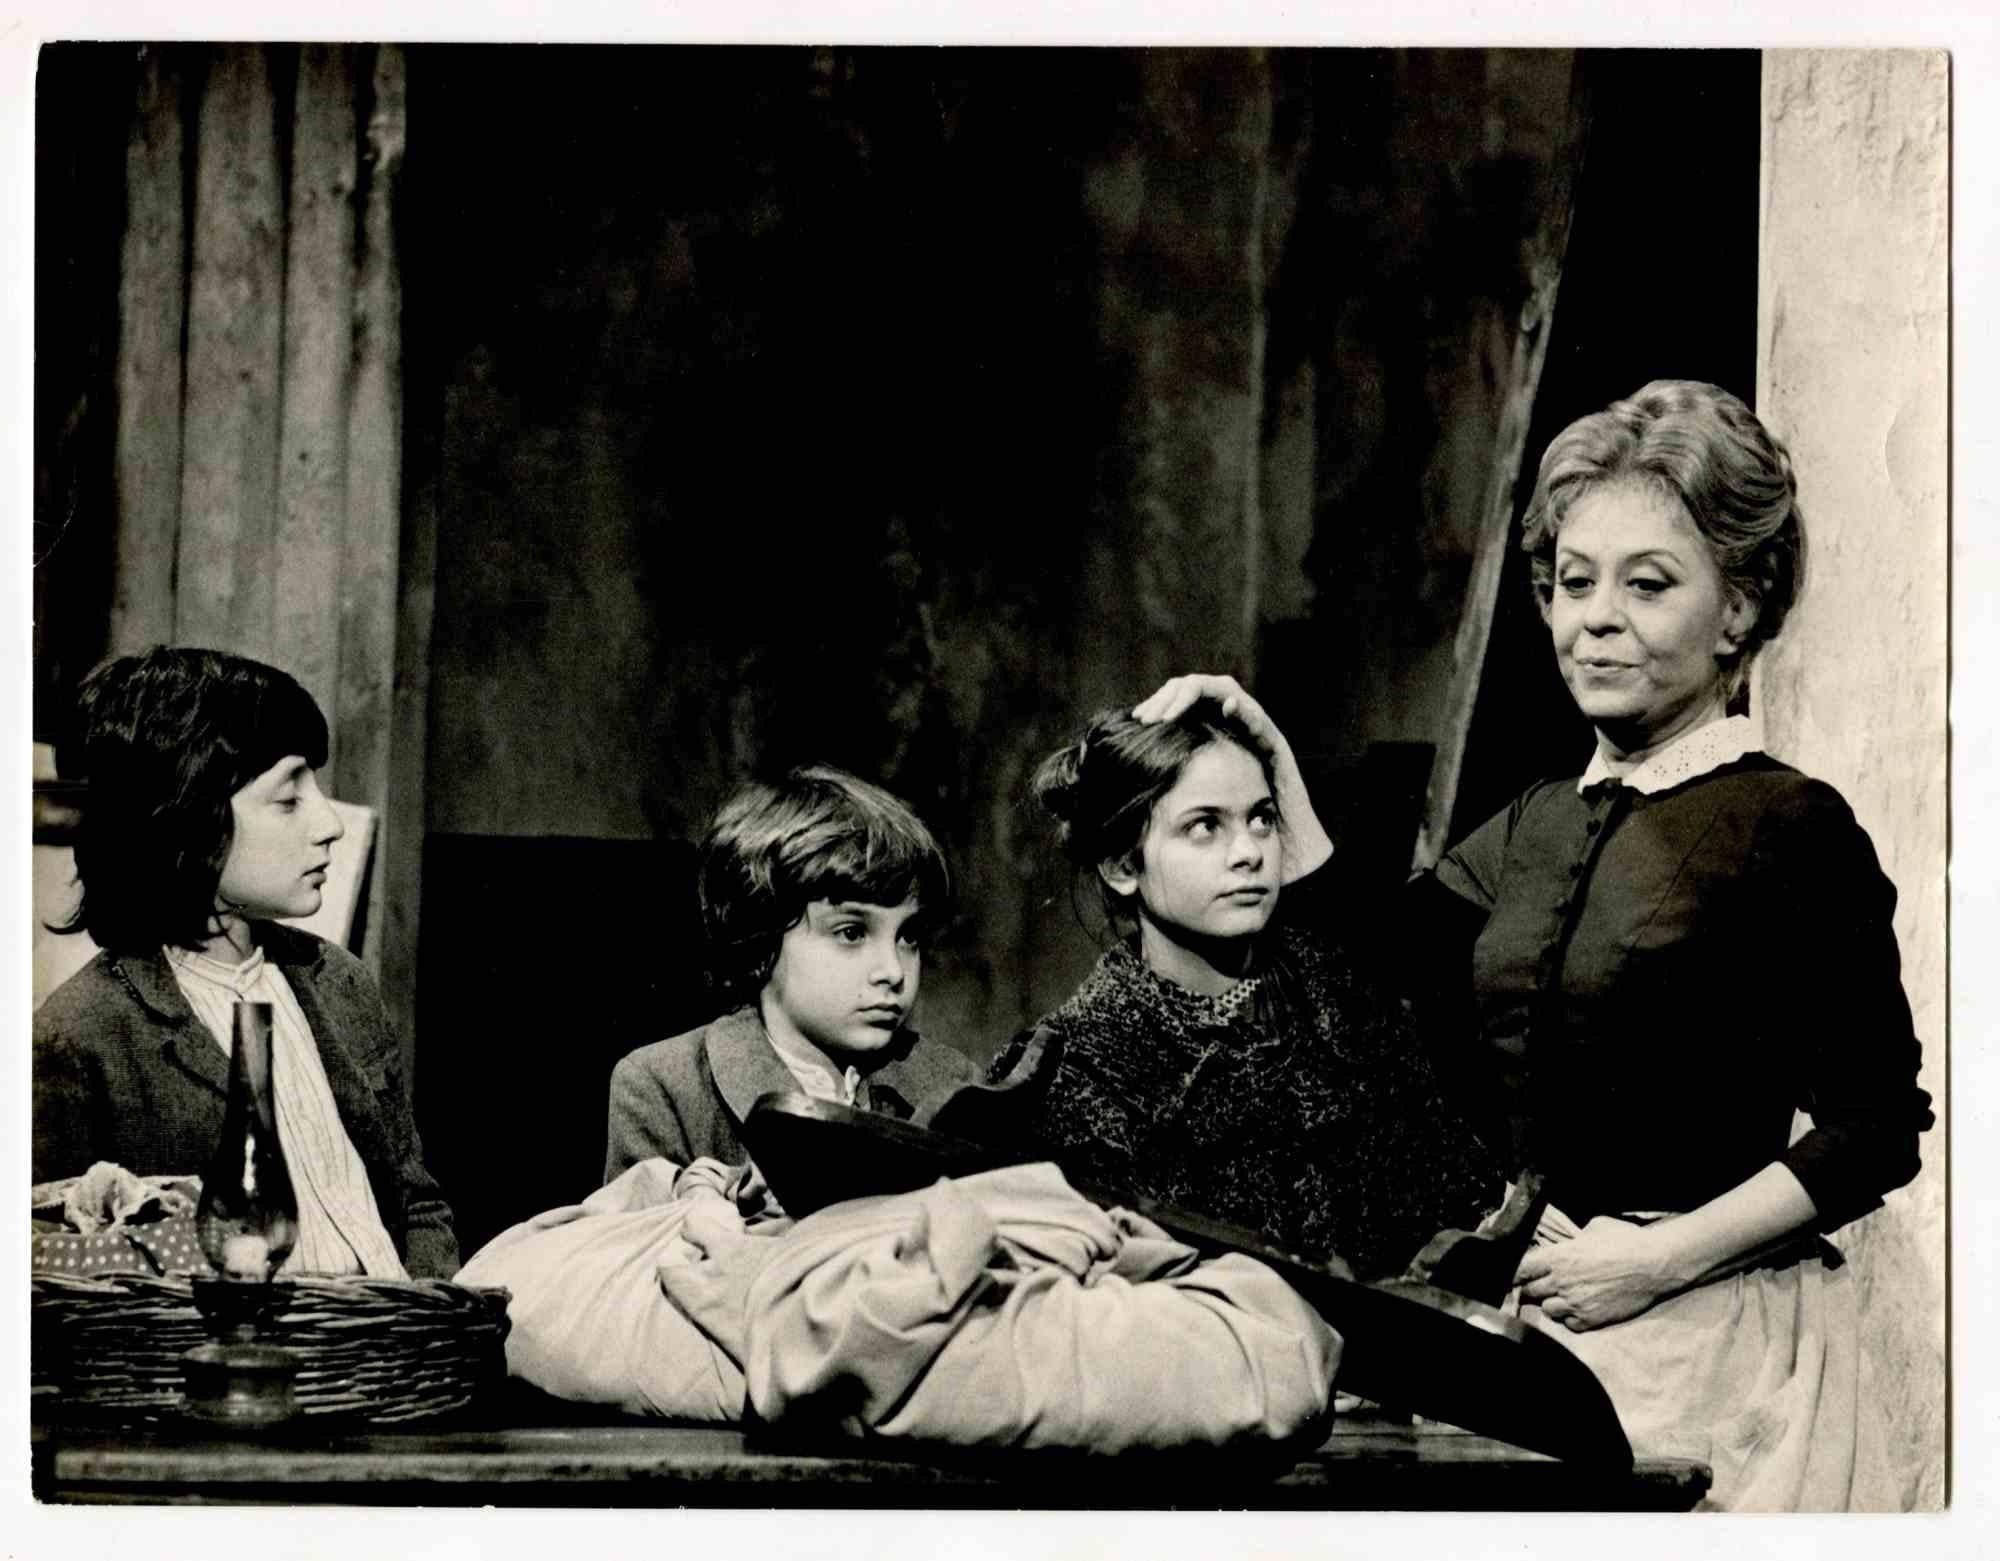 Unknown Figurative Photograph - Giulietta Masina - Golden Age of Italian Cinema - Mid 20th Century